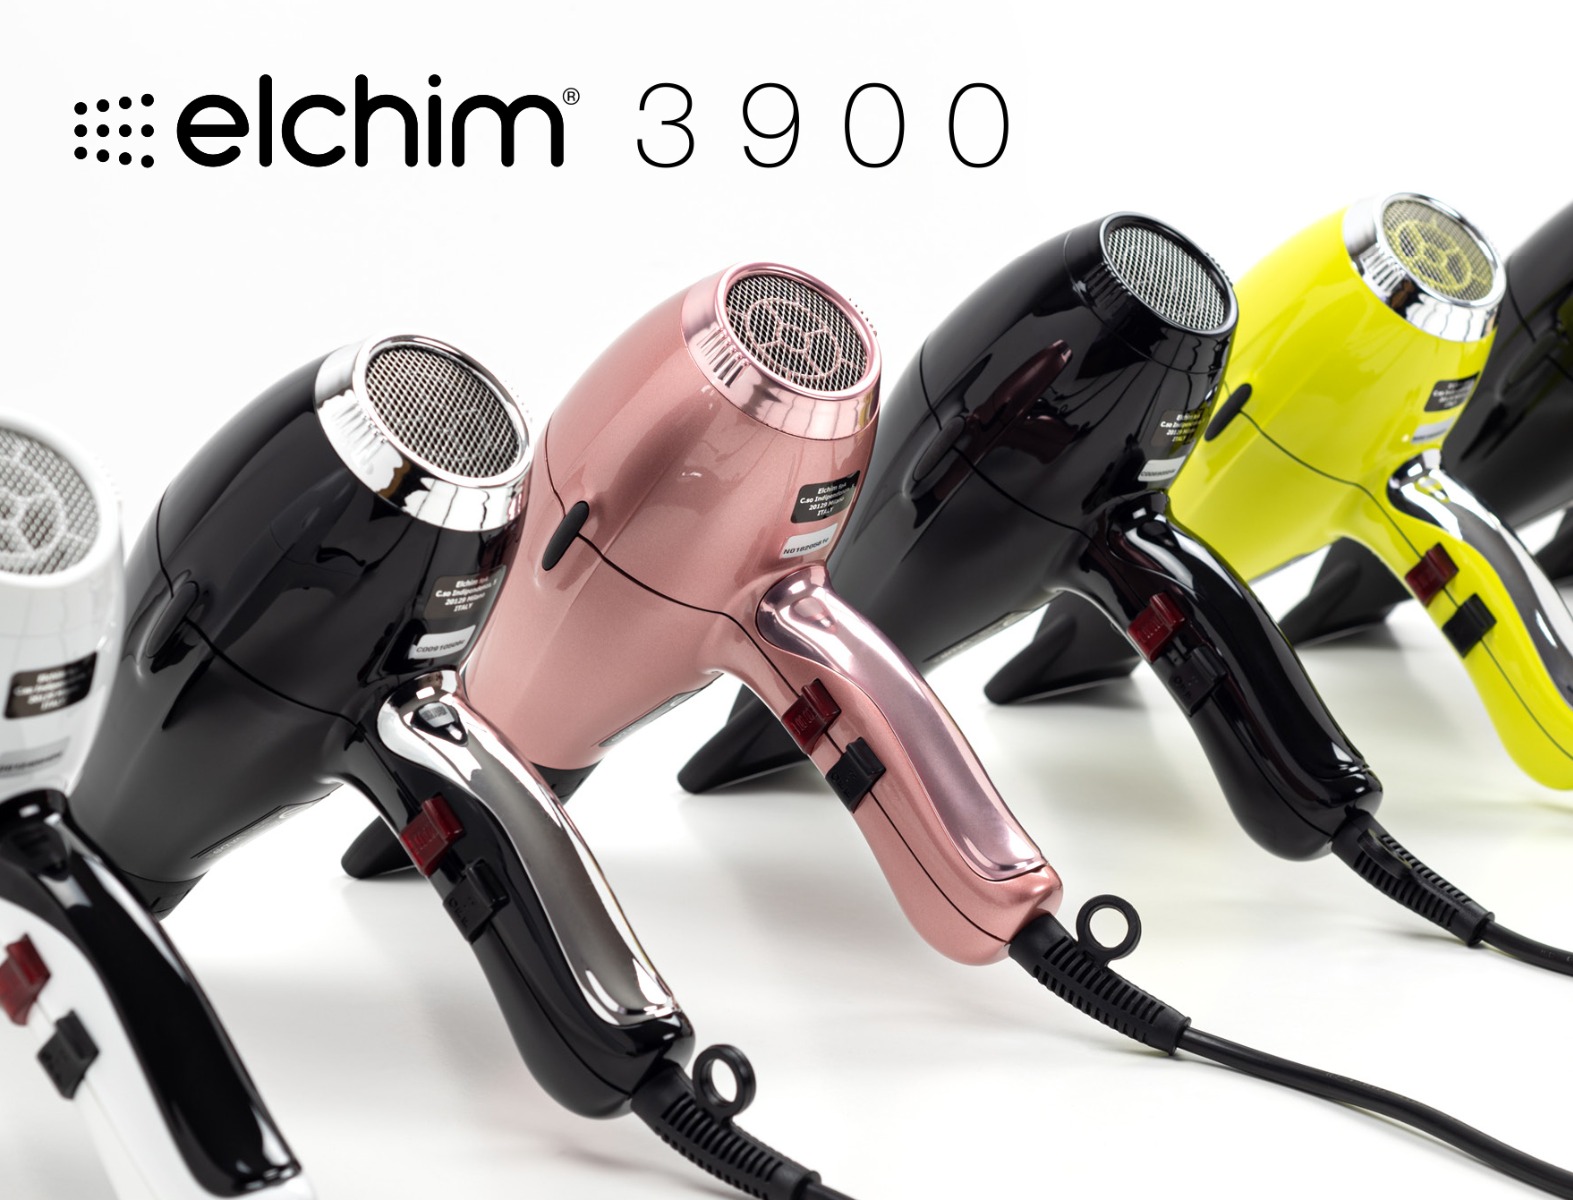 Elchim 3900